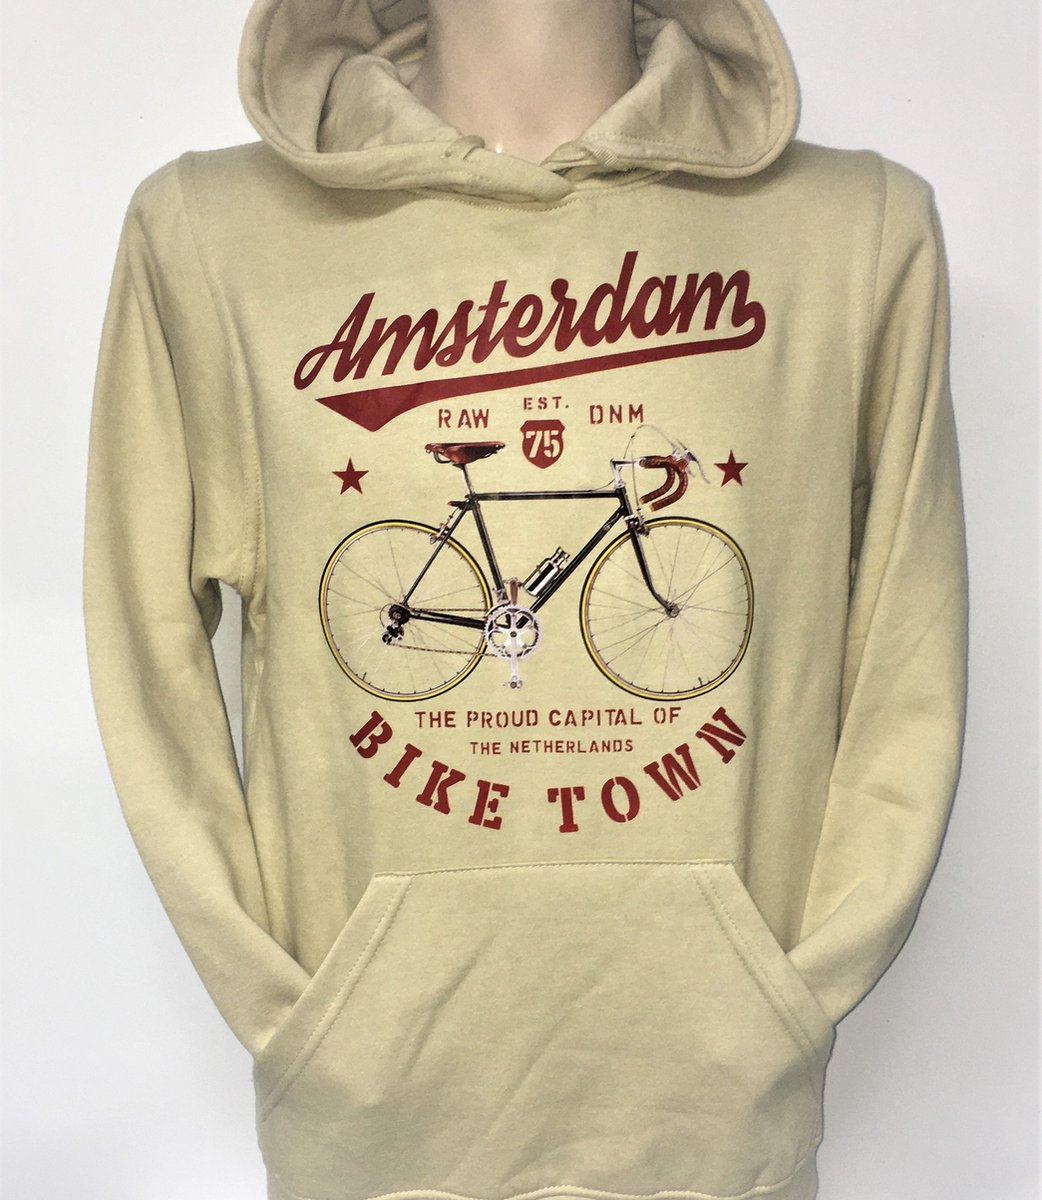 Hooded Sweater - Met Trekkoord - Capuchon - Chill - Trui - Vest - met capuchon - Outdoor - Fiets - Raw - Denim - Race Fiets - Capital Amsterdam - Bike Town - Race Fiets Amsterdam - Zand - Beige - Maat M